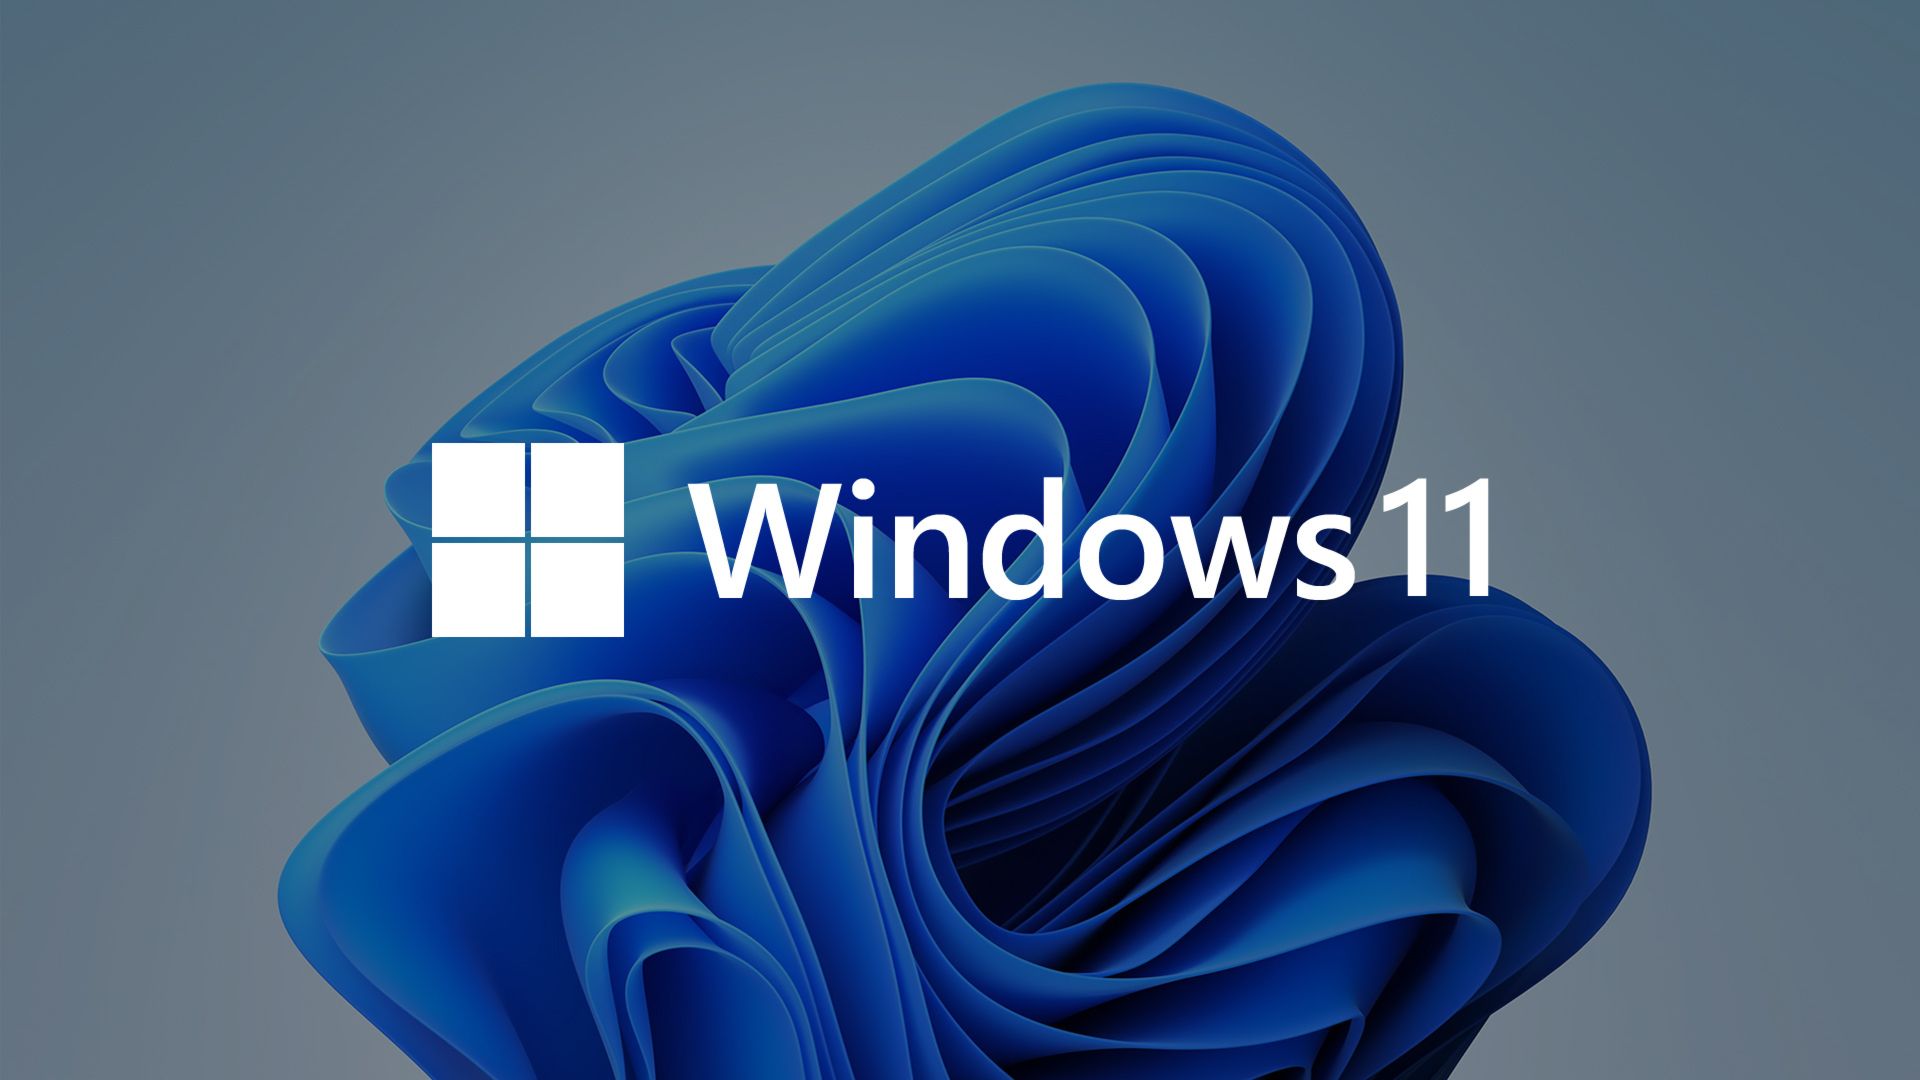 Windows 11 Wallpaper Windows 11 Background Download